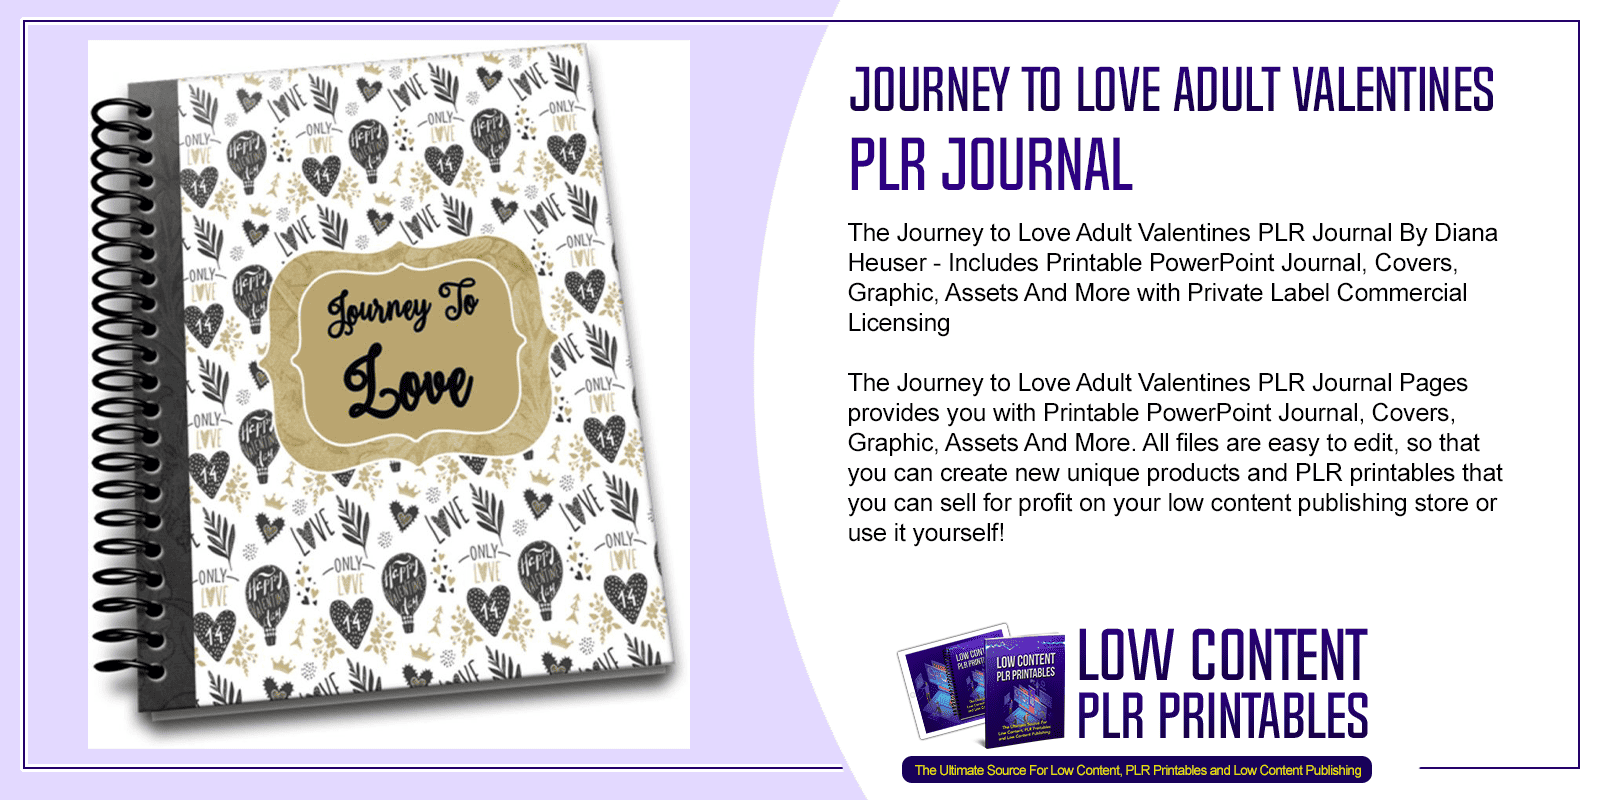 Journey to Love Adult Valentines PLR Journal 2